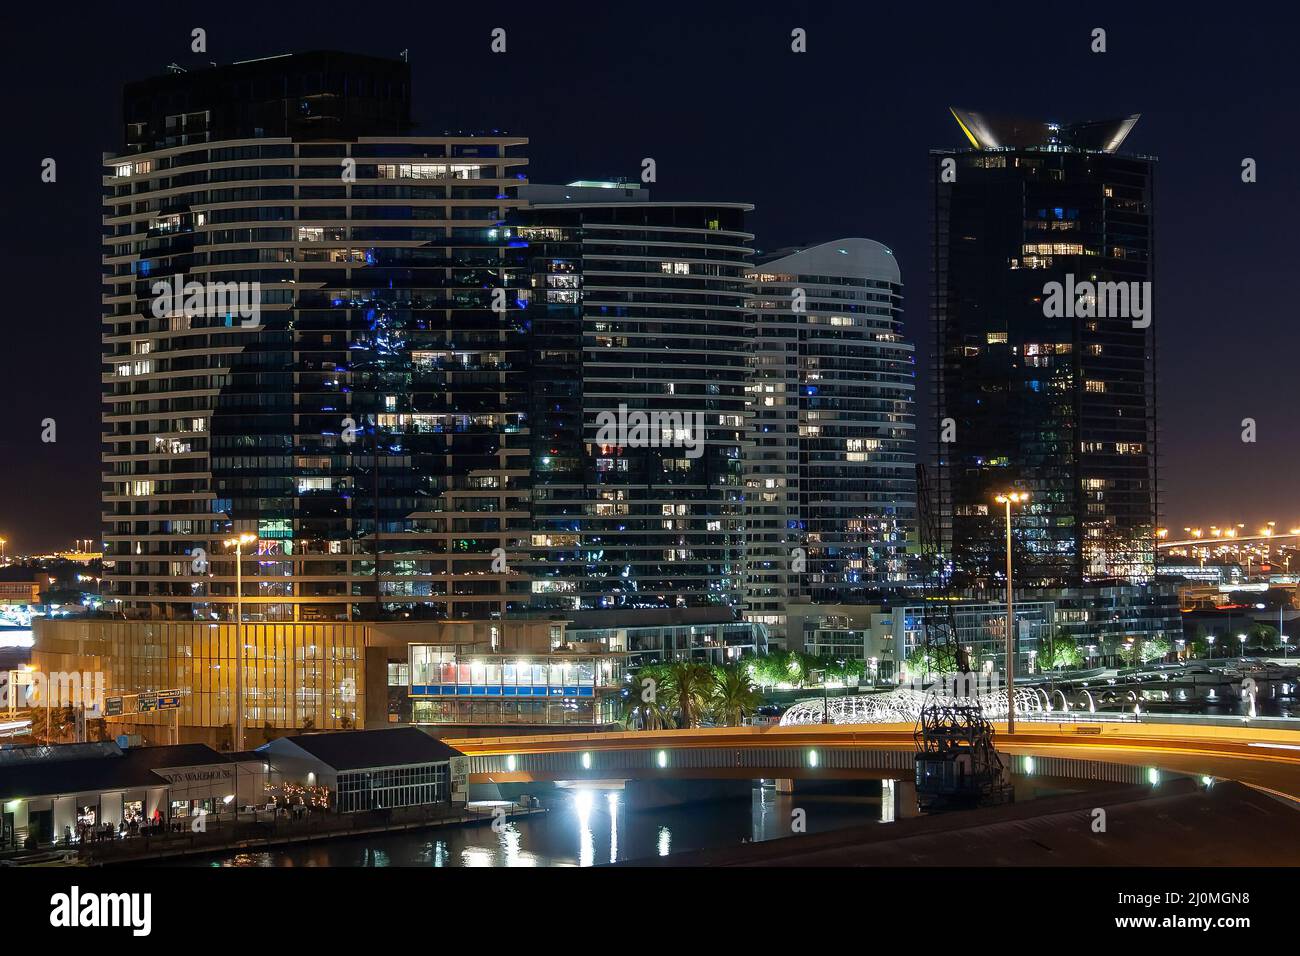 Melbourne city docklands precinct nightscape full of lights Stock Photo